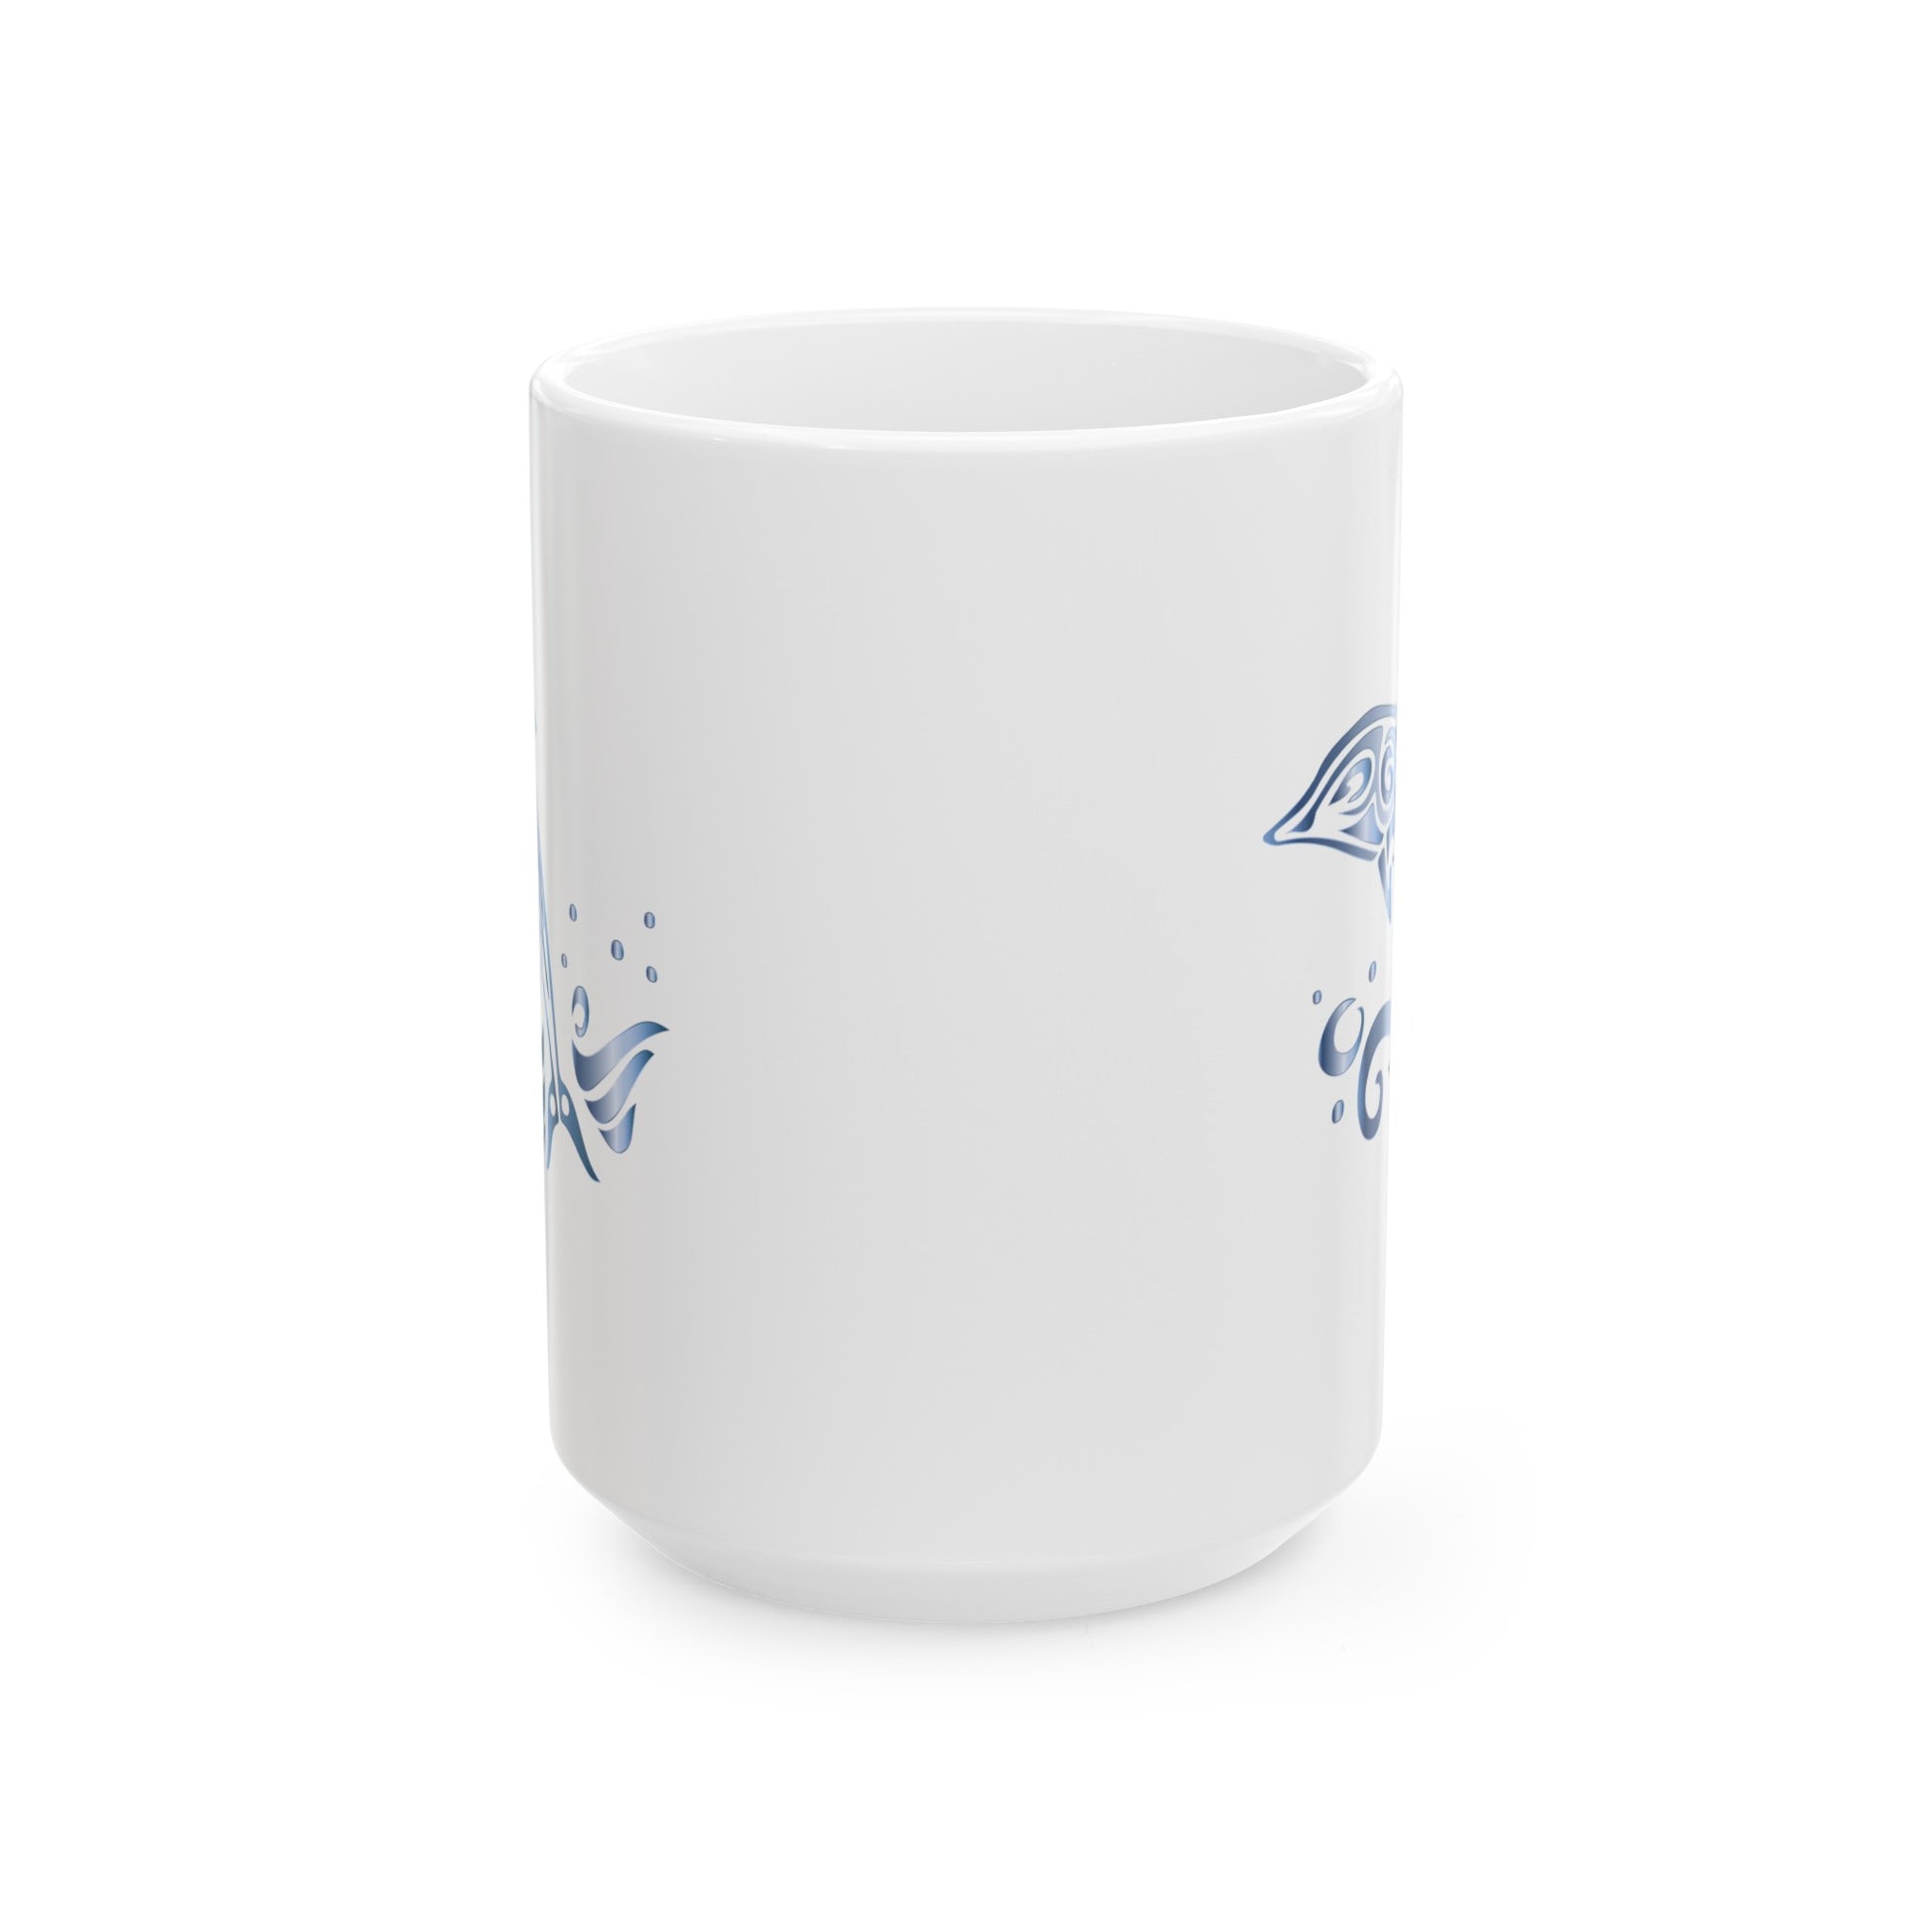 Dolphin Coffee Mug - Double Sided White Ceramic 15oz by TheGlassyLass.com